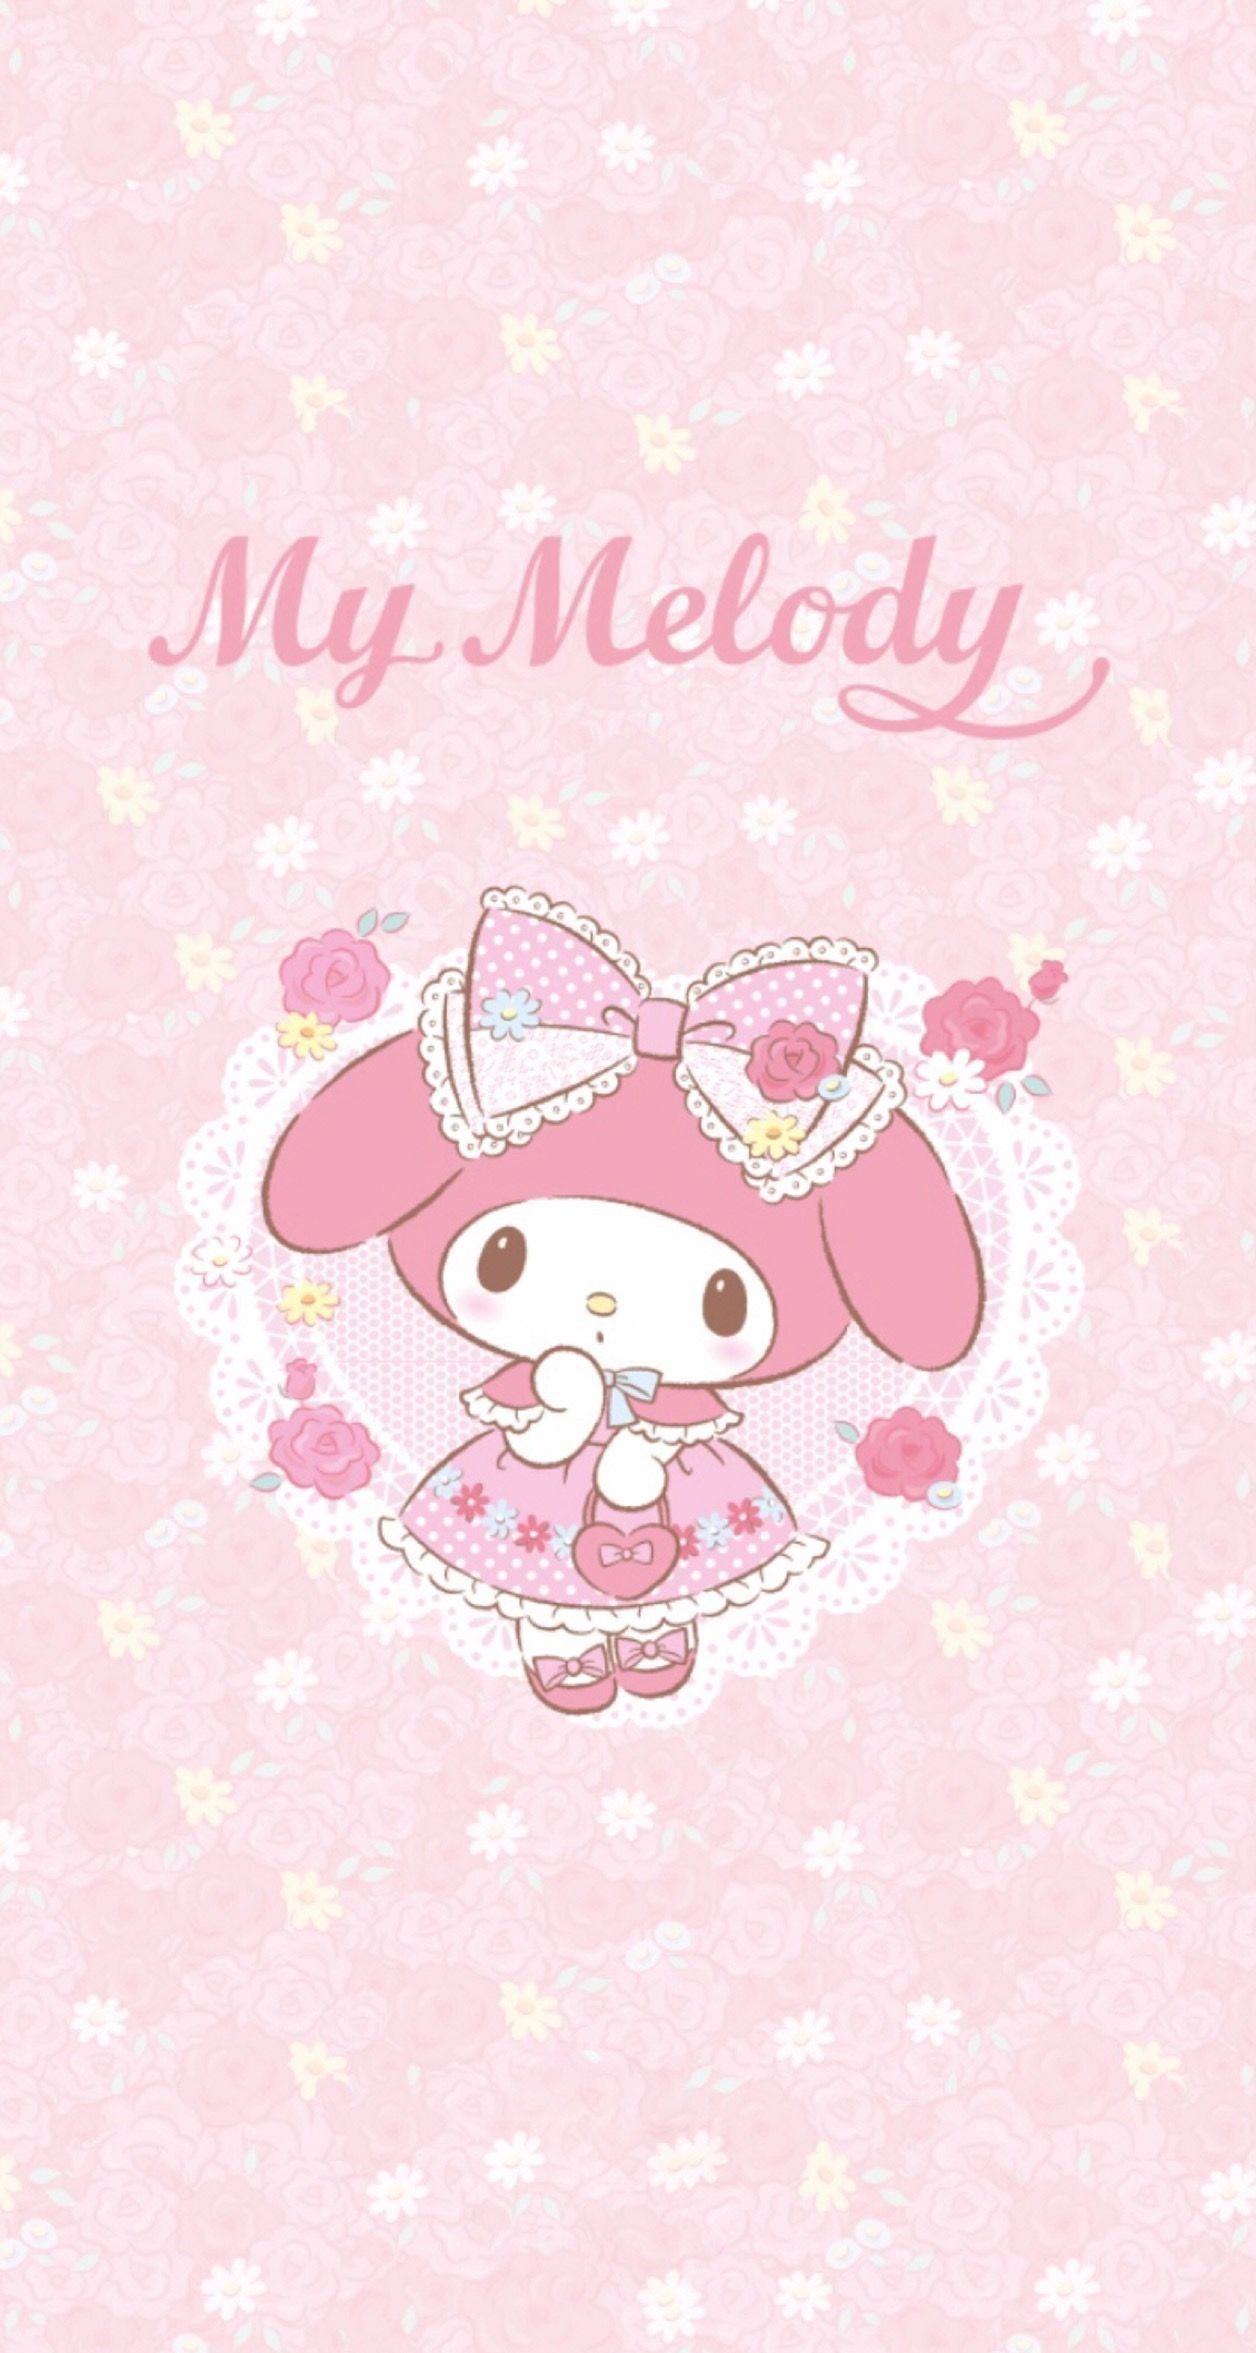 Sanrio Characters Wallpaper. My melody wallpaper, Hello kitty wallpaper, Hello kitty wallpaper hd